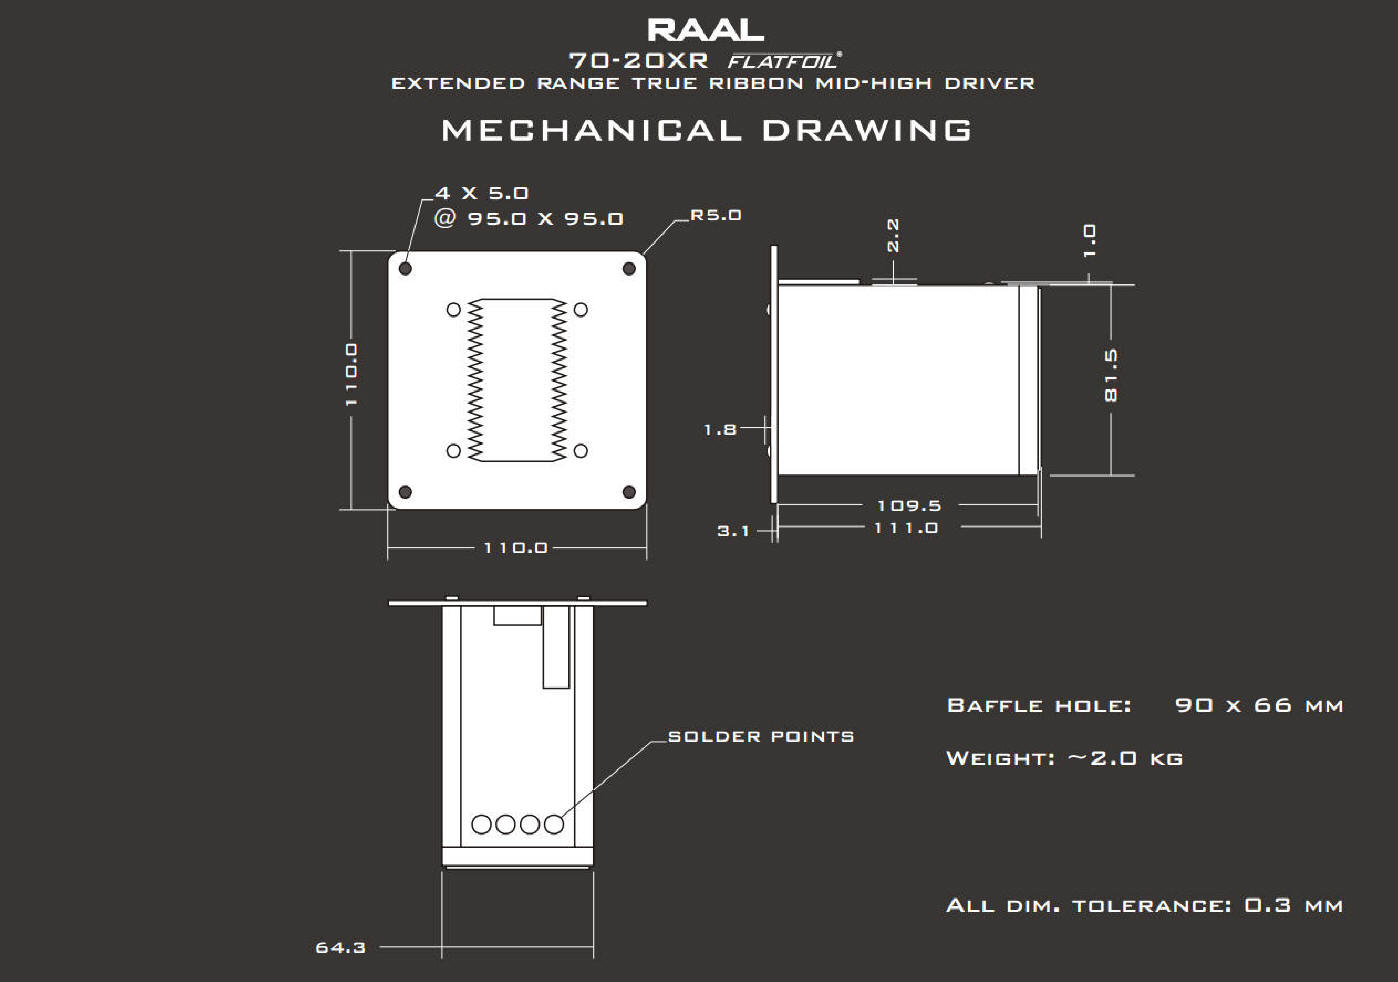 Raal 70-20 XR dimensions